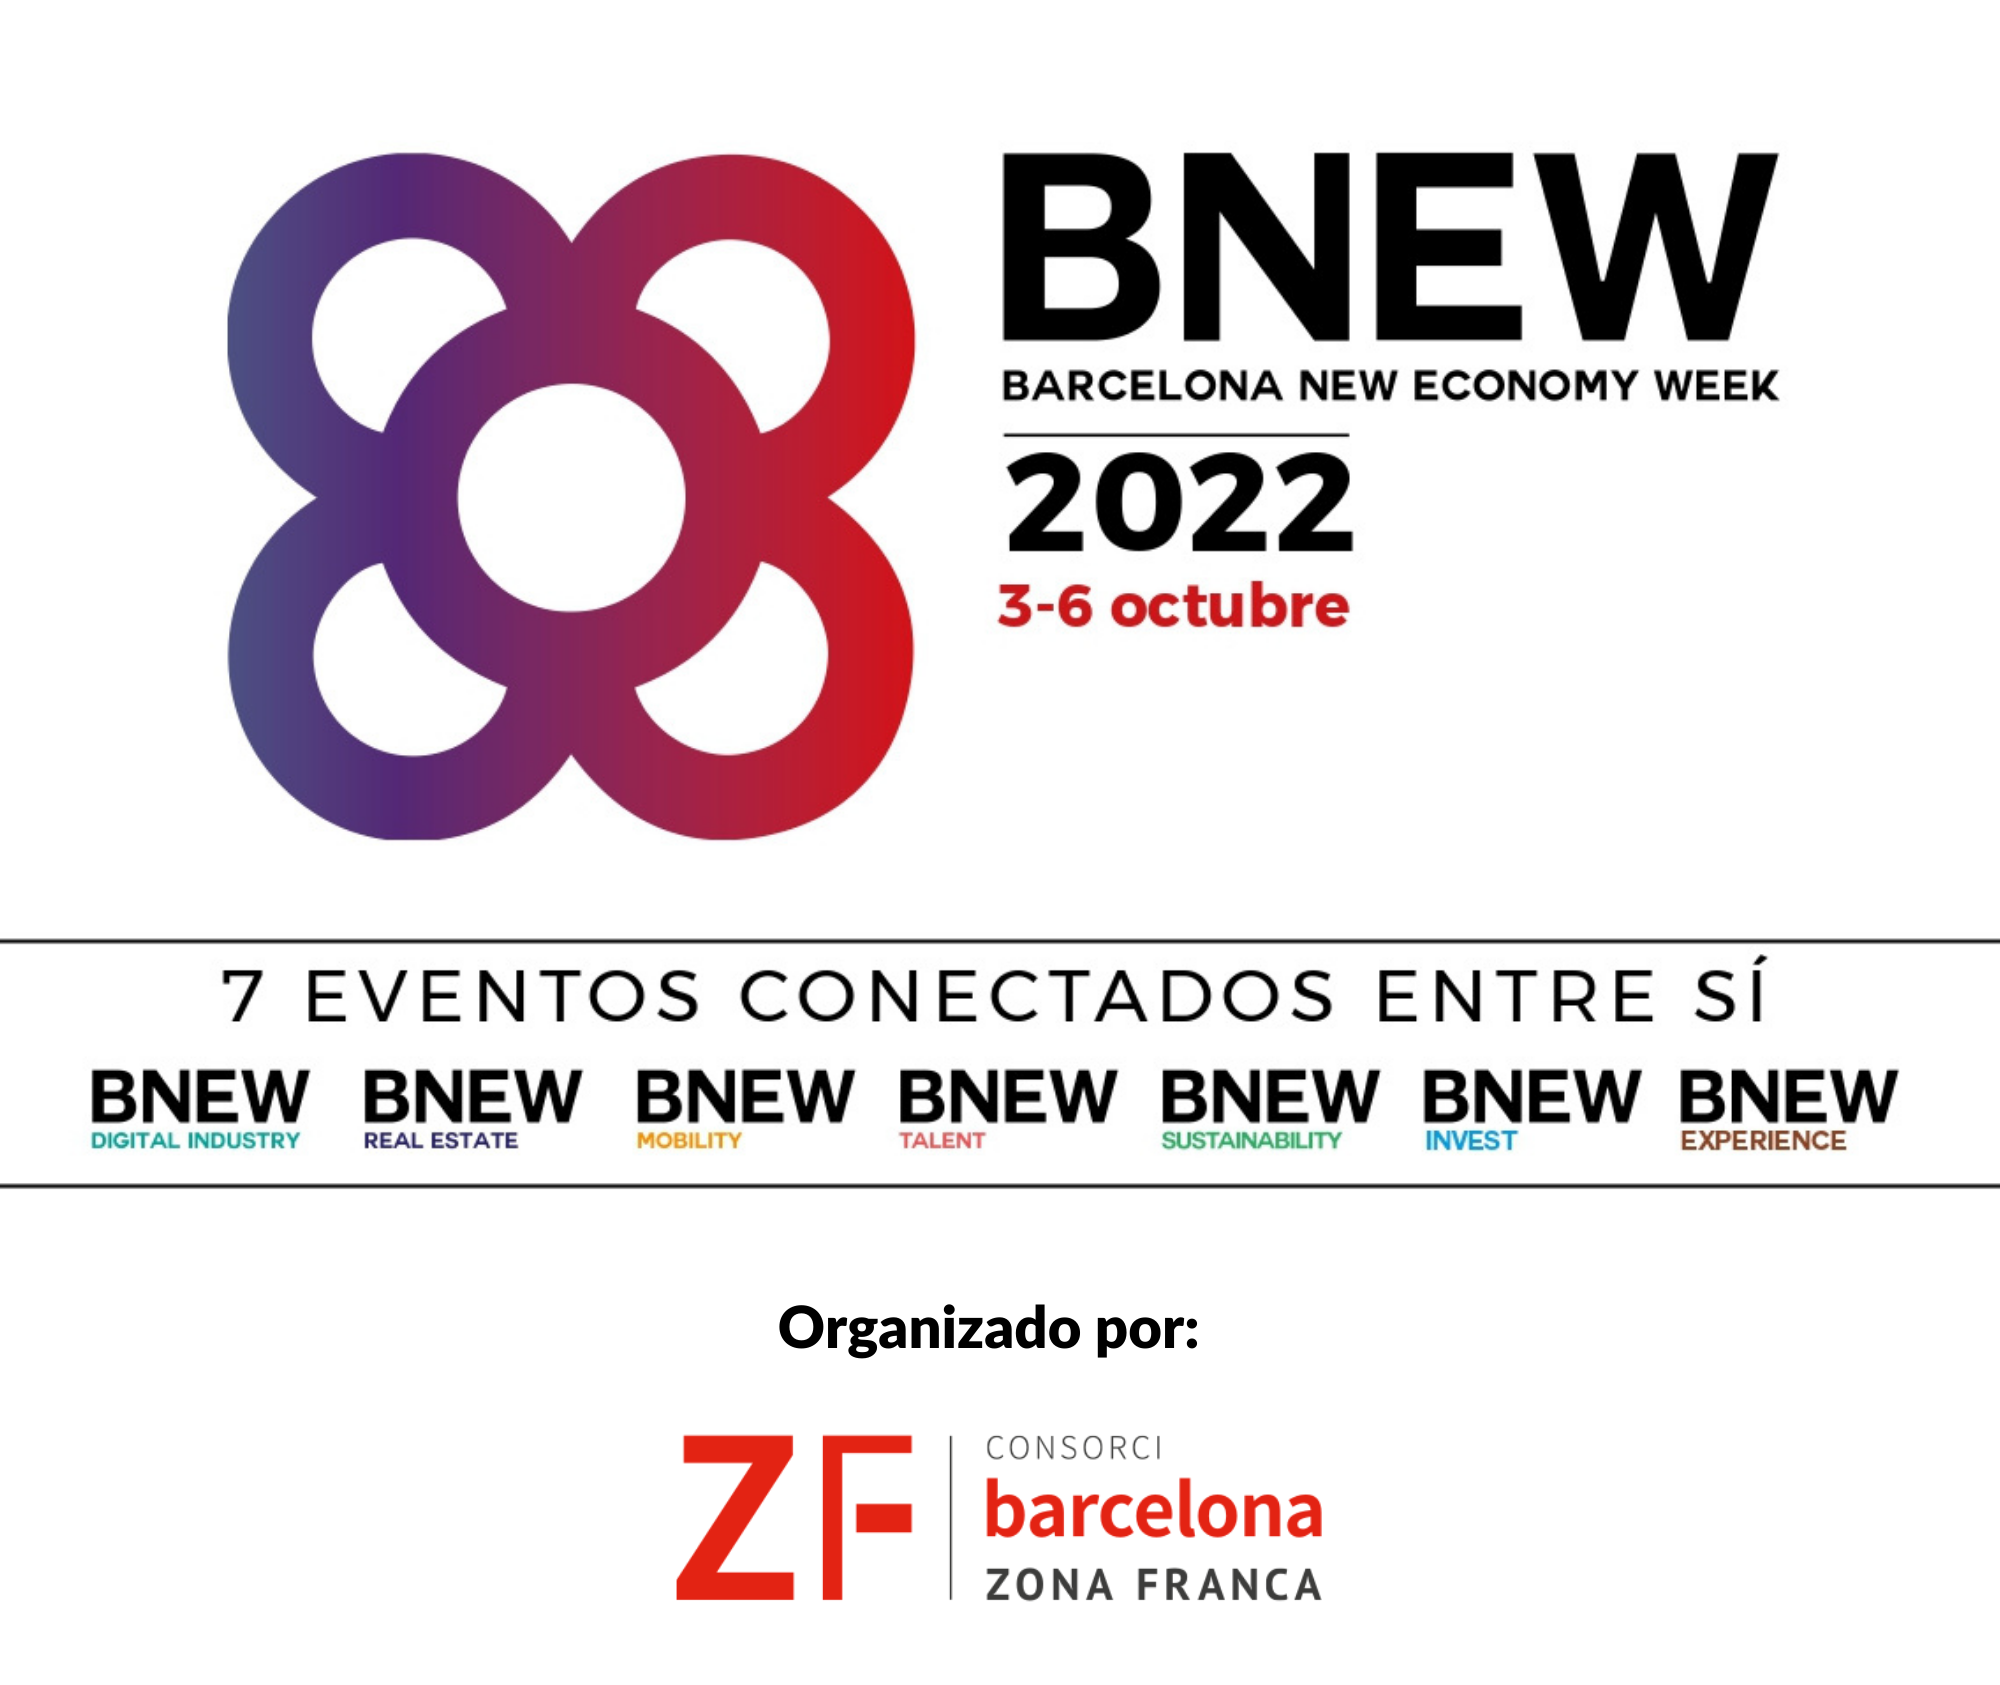 Barcelona New Economy Week - BNEW